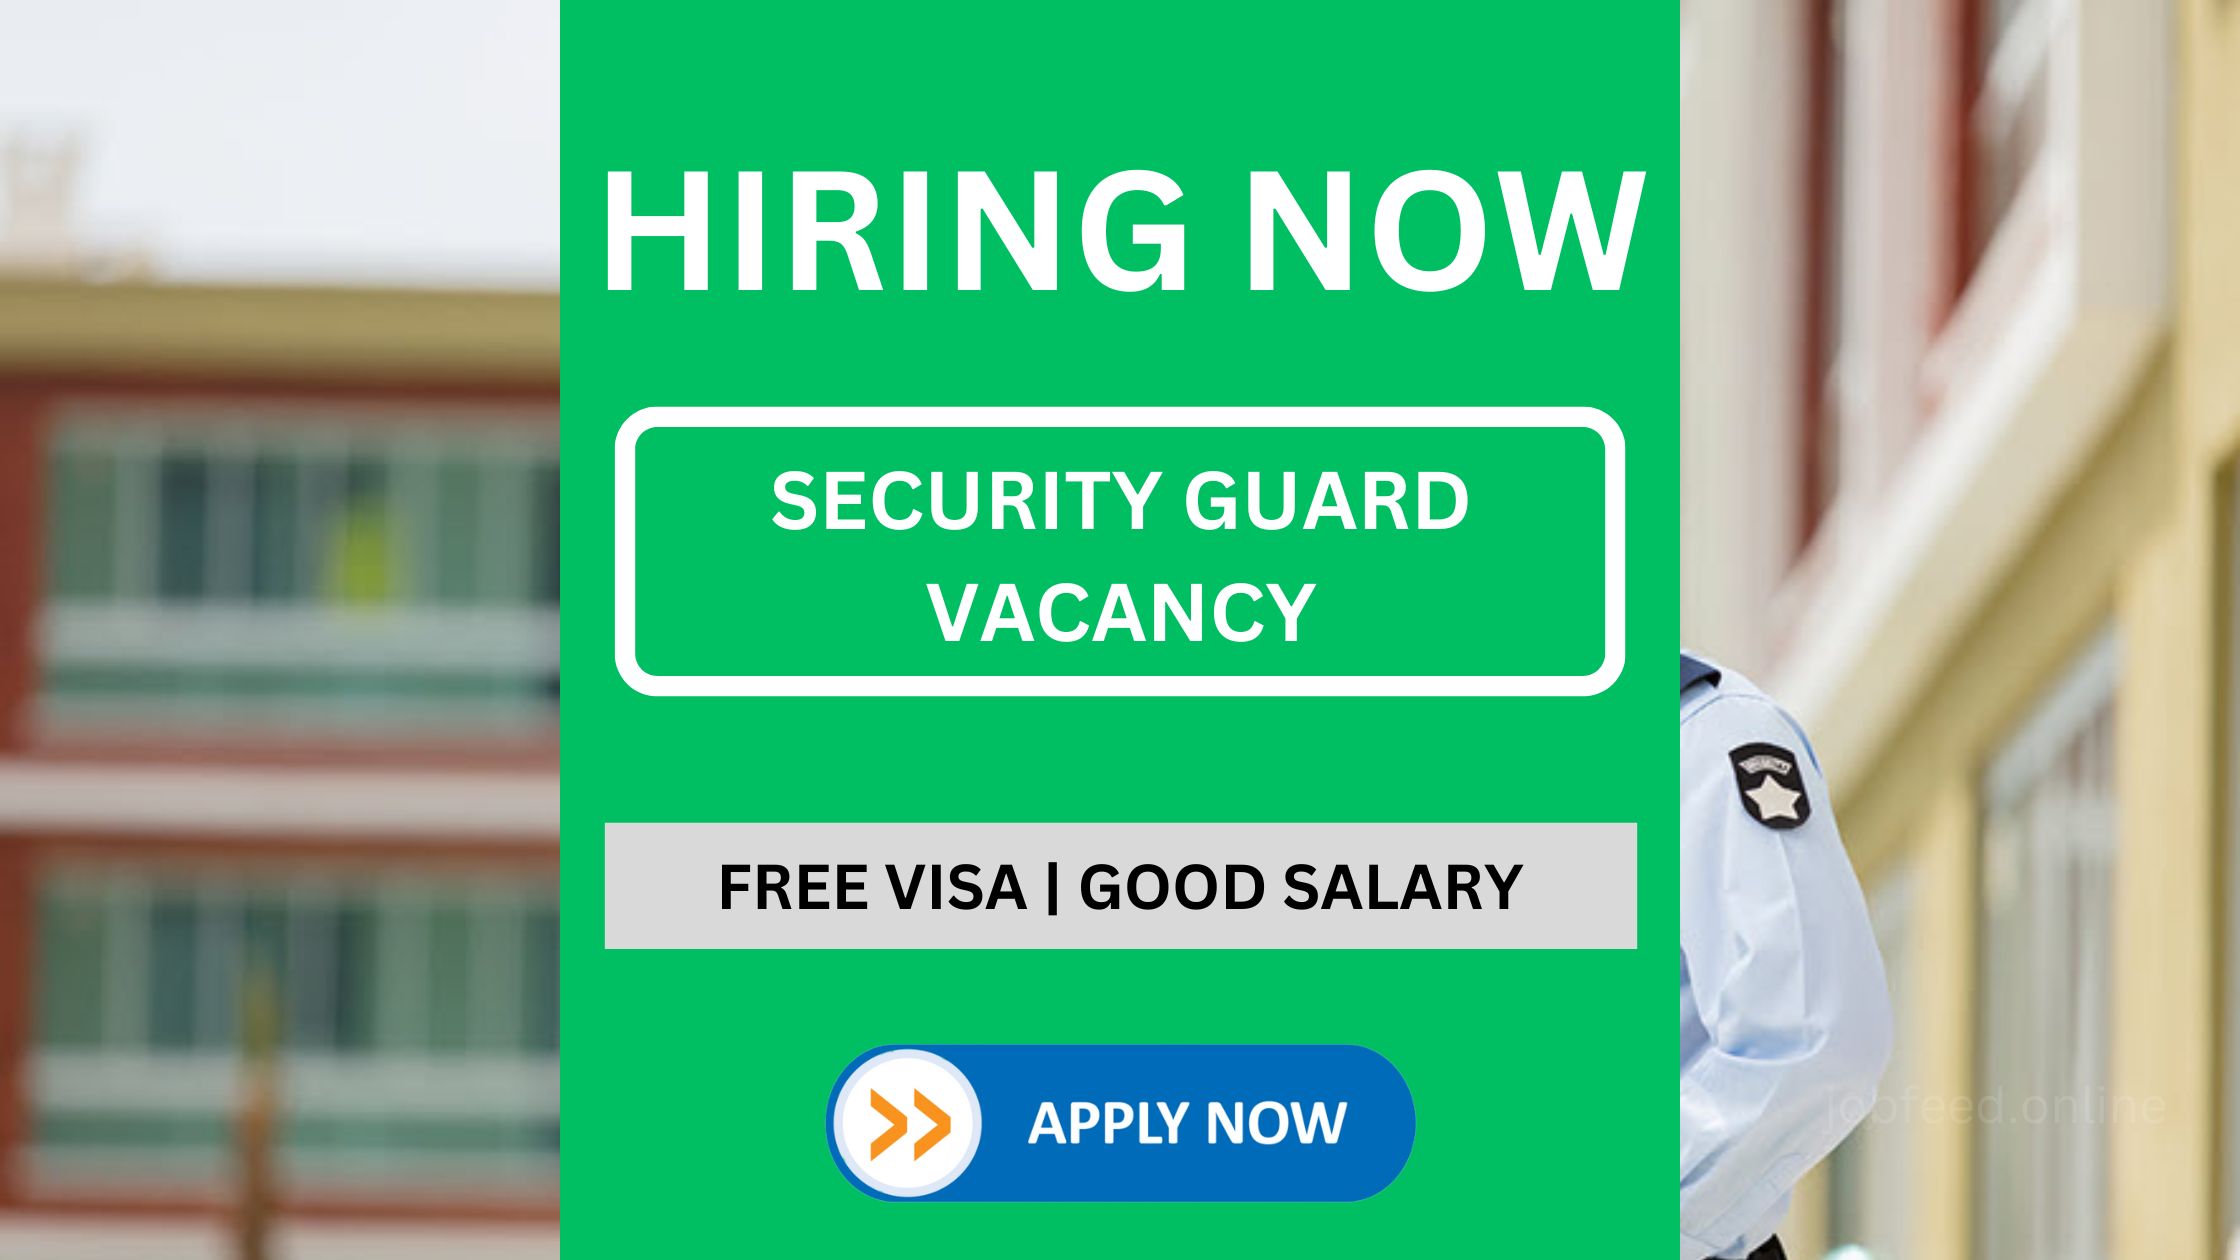 Security Guard Vacancy in Transguard Group UAE